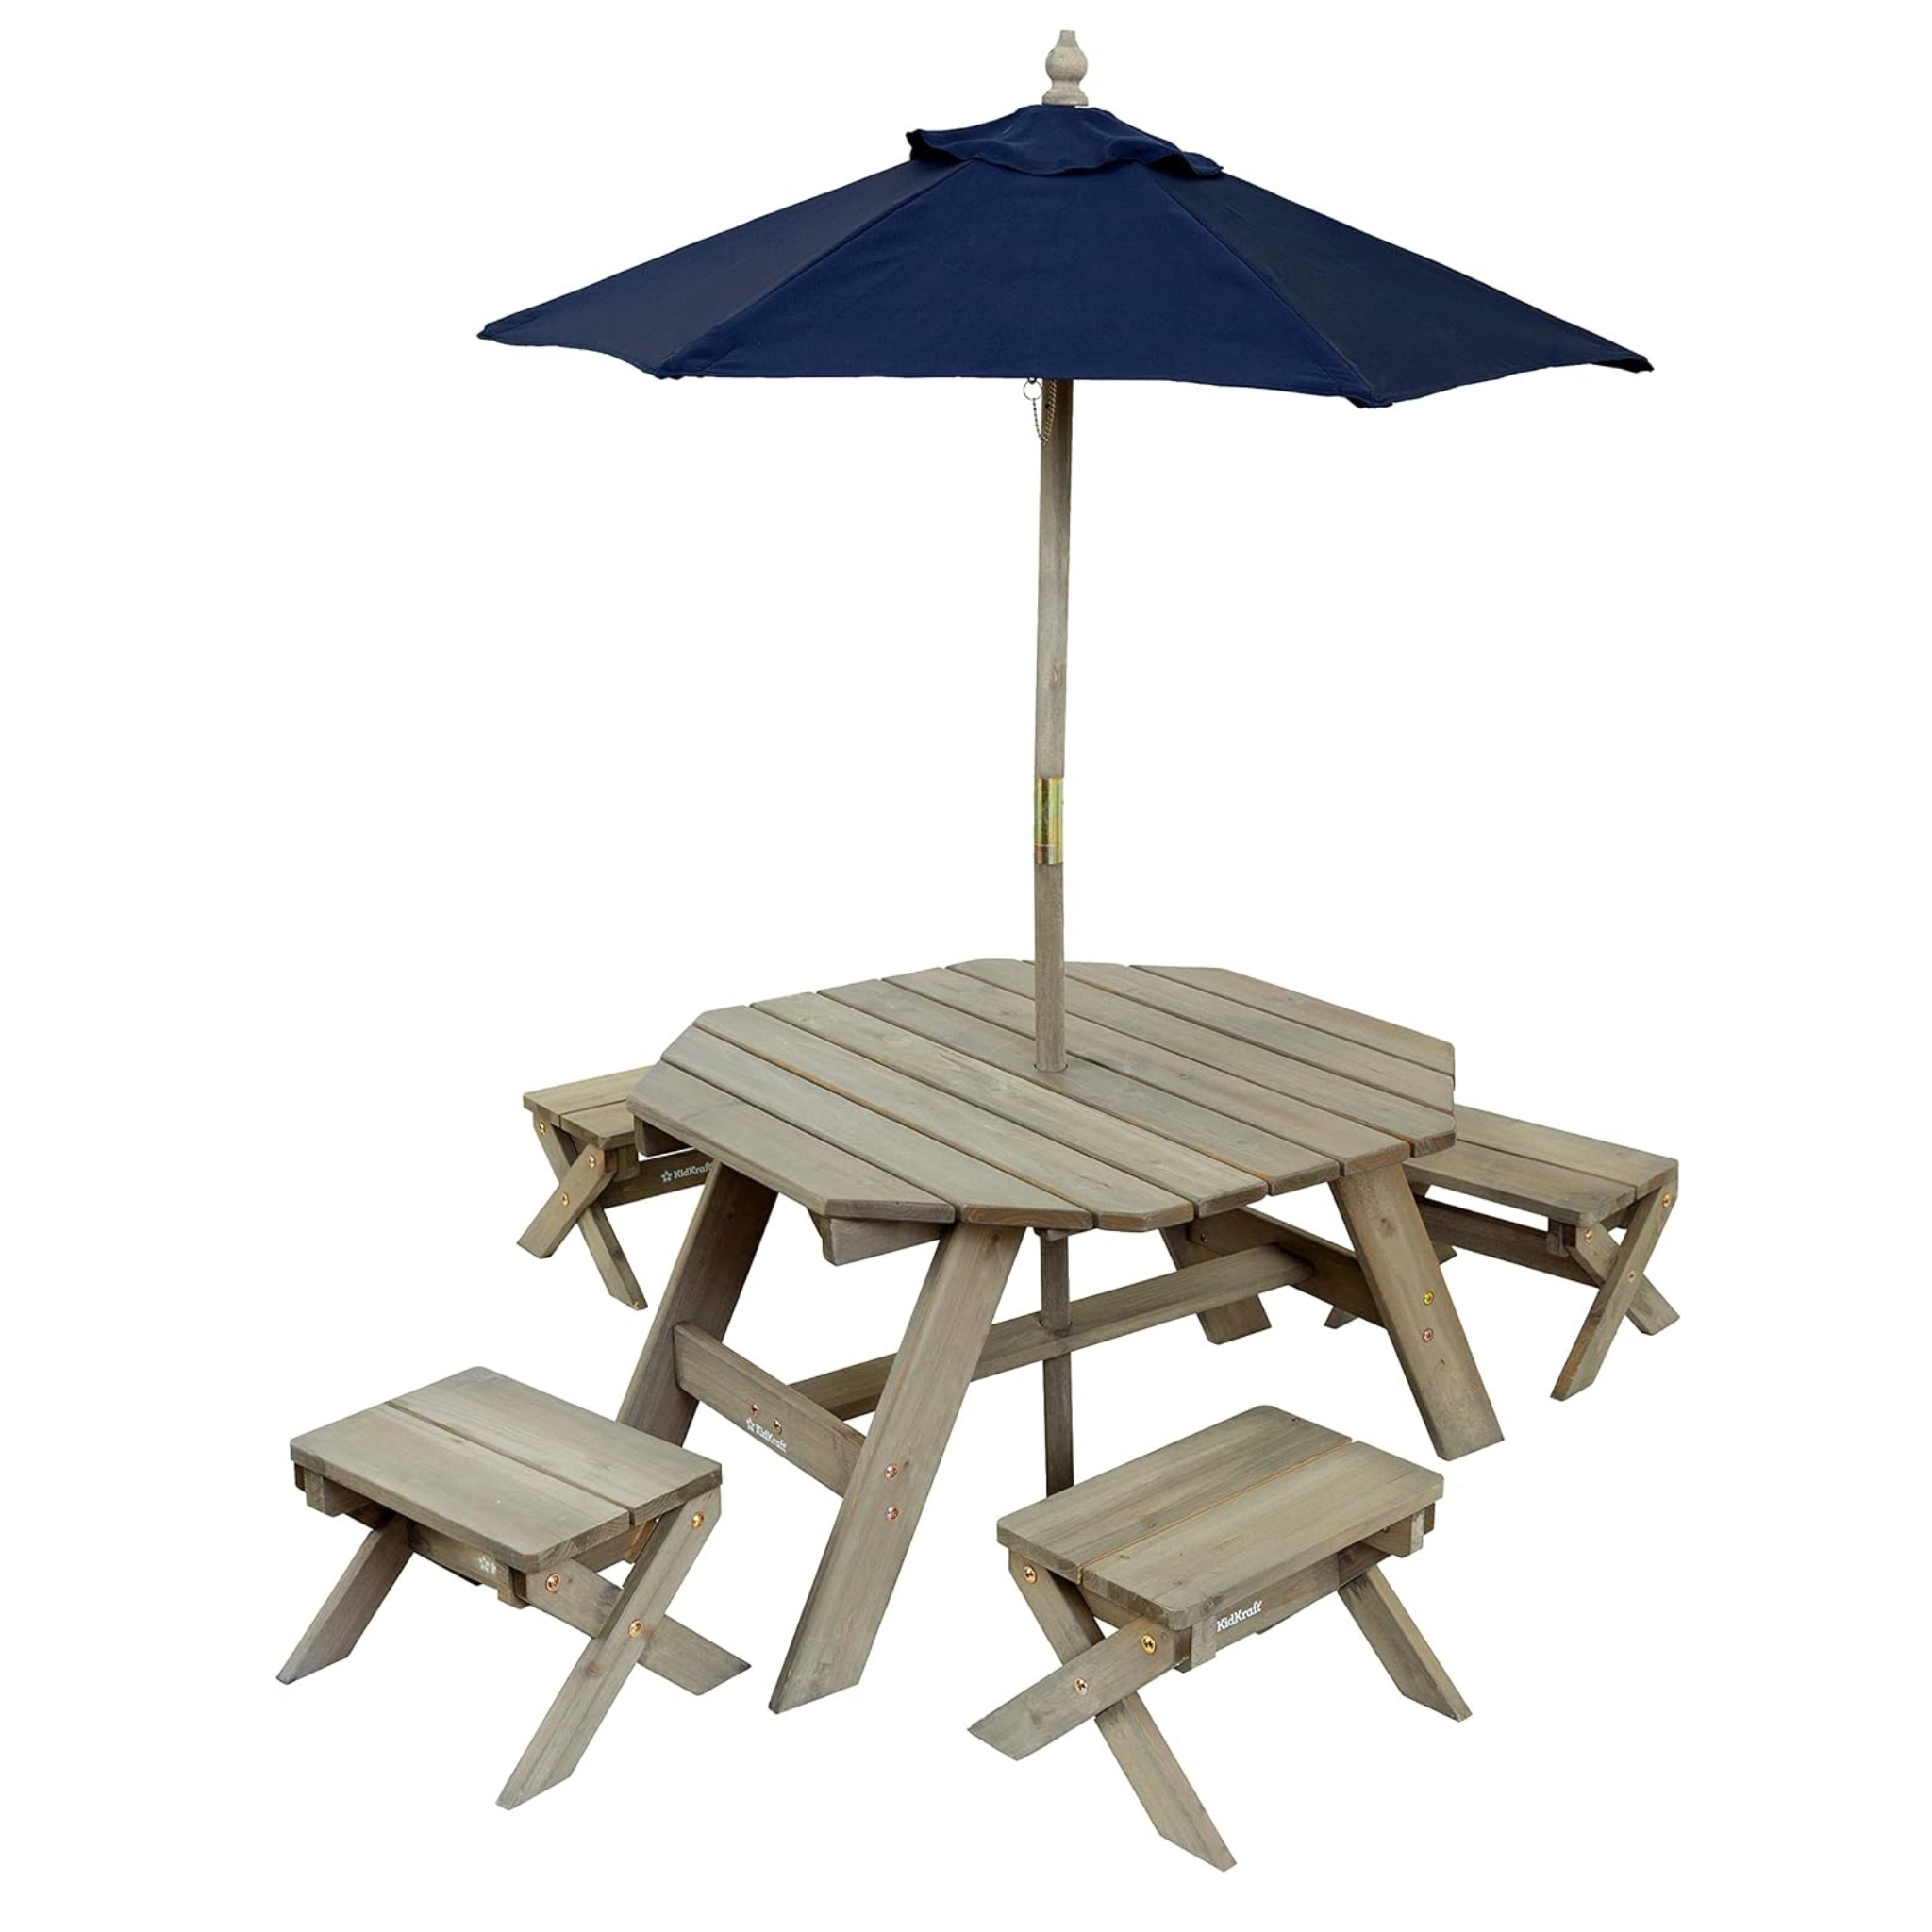 KidKraft Wooden Octagon Table, Stools & Umbrella Set